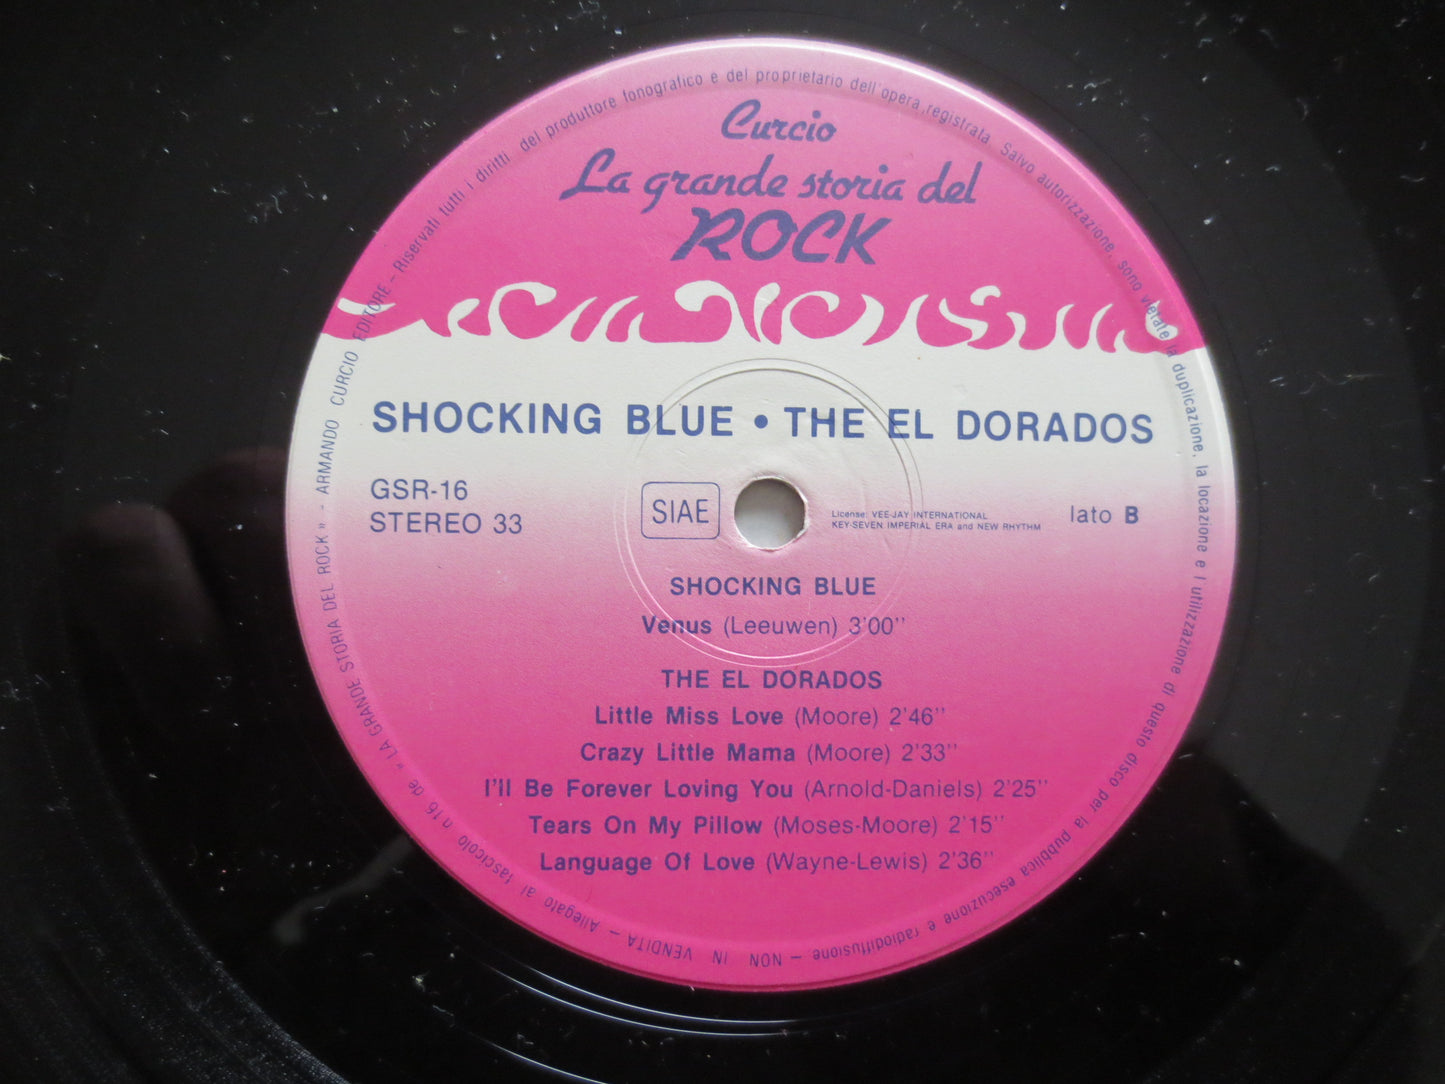 La Grande Storia Del Rock, FATS DOMINO Album, SHOCKING Blue Album, Chris Montez Album, El Dorados Album, Lps, 1981 Records